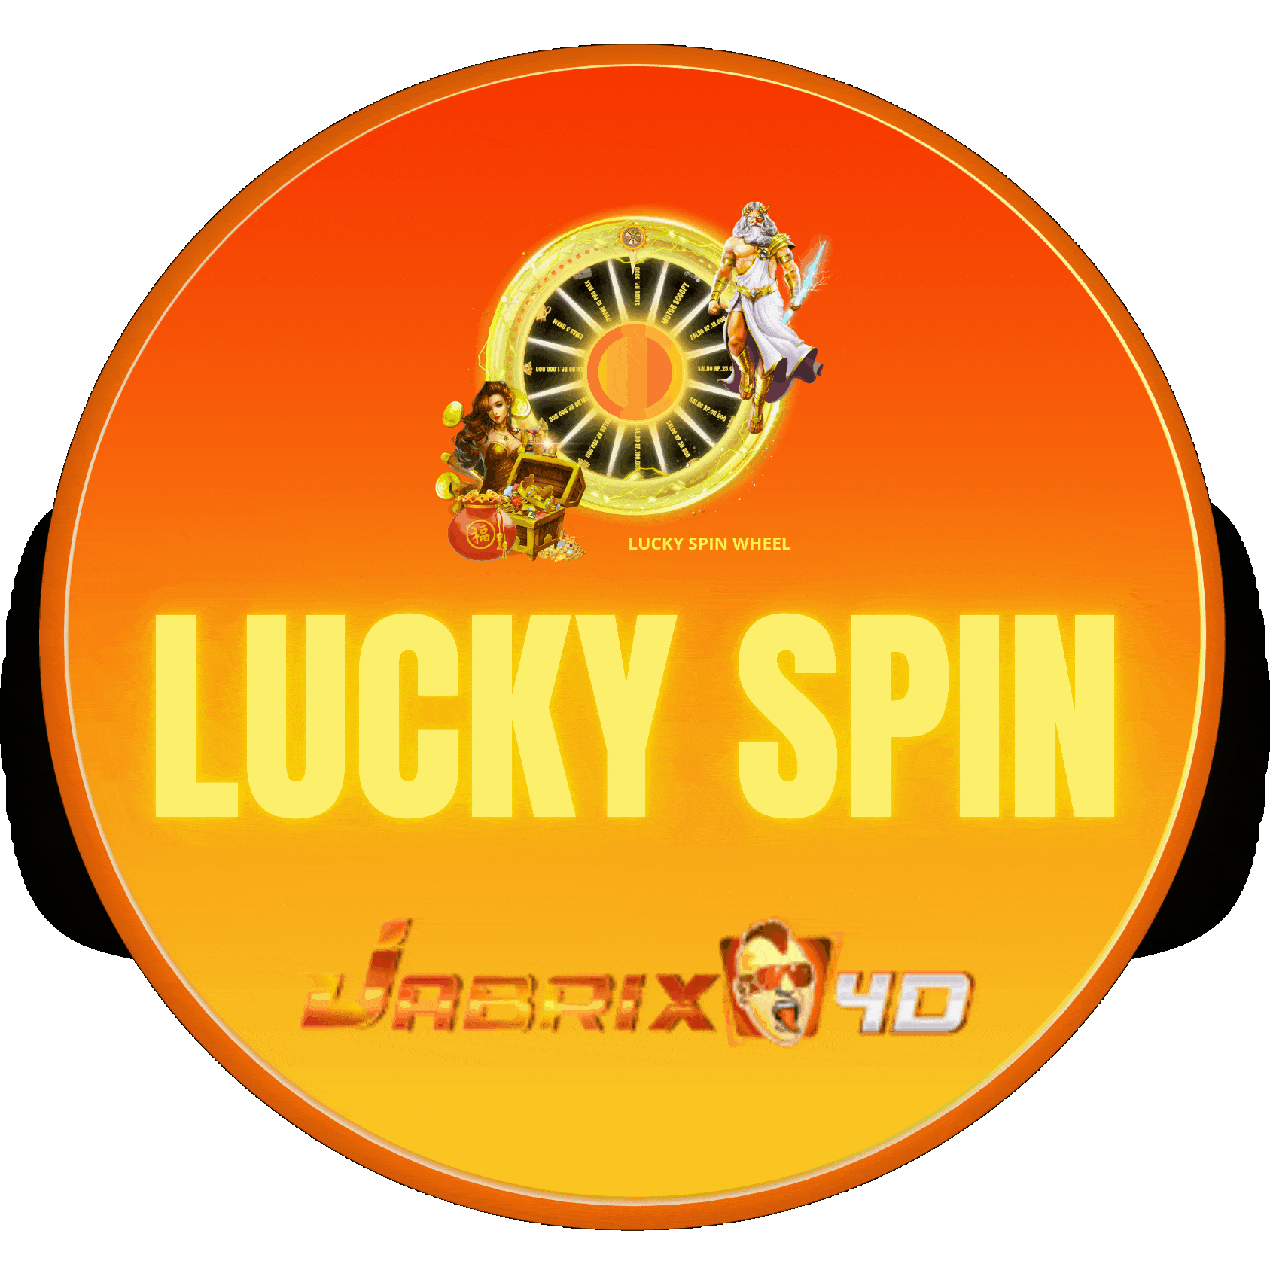 Luckyspin JABRIX4D